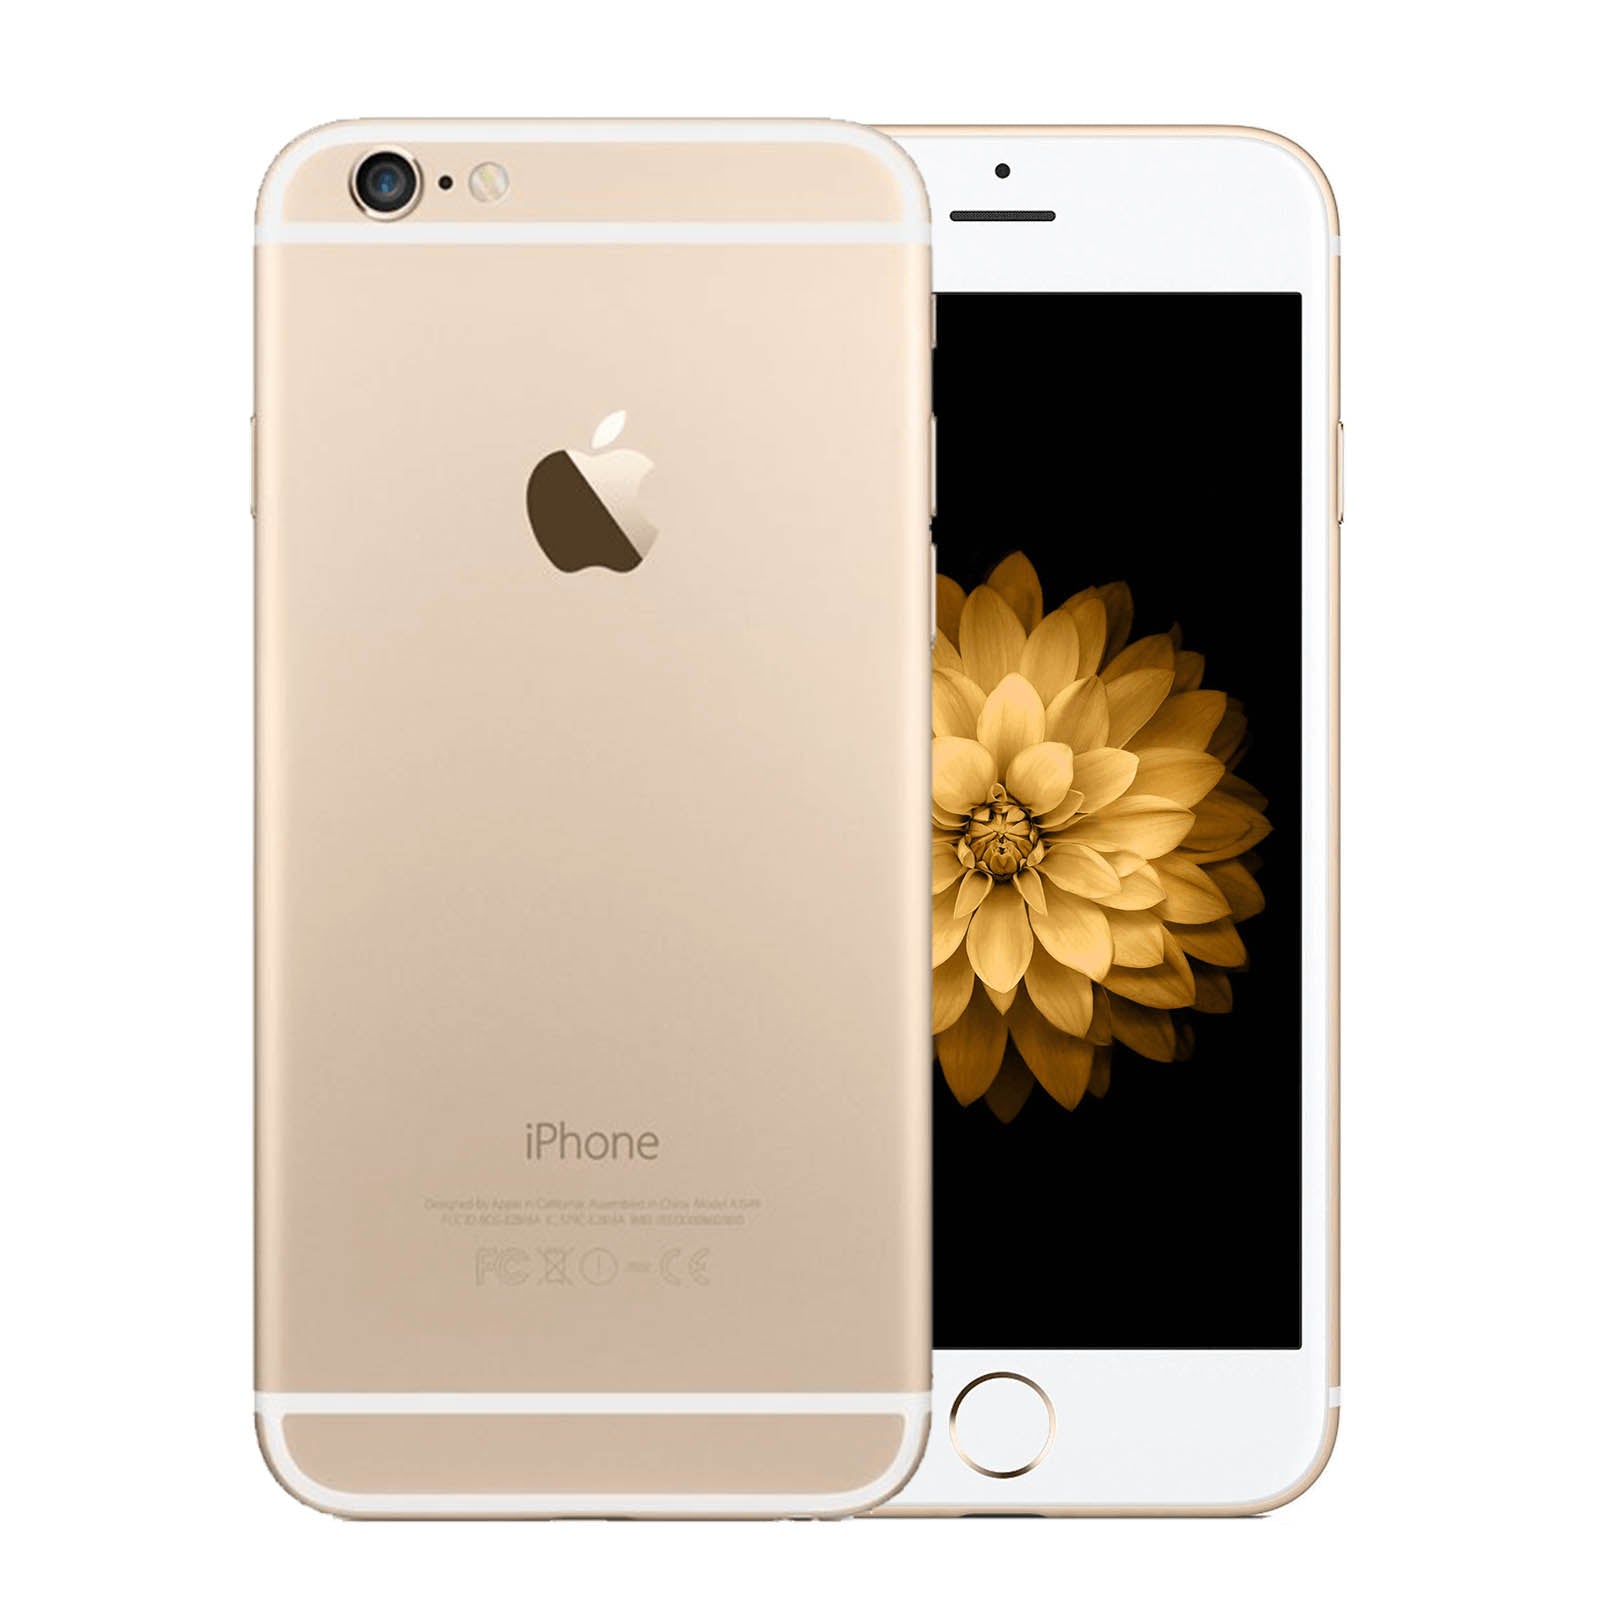 Apple iPhone 6 32GB Gold Good - Unlocked